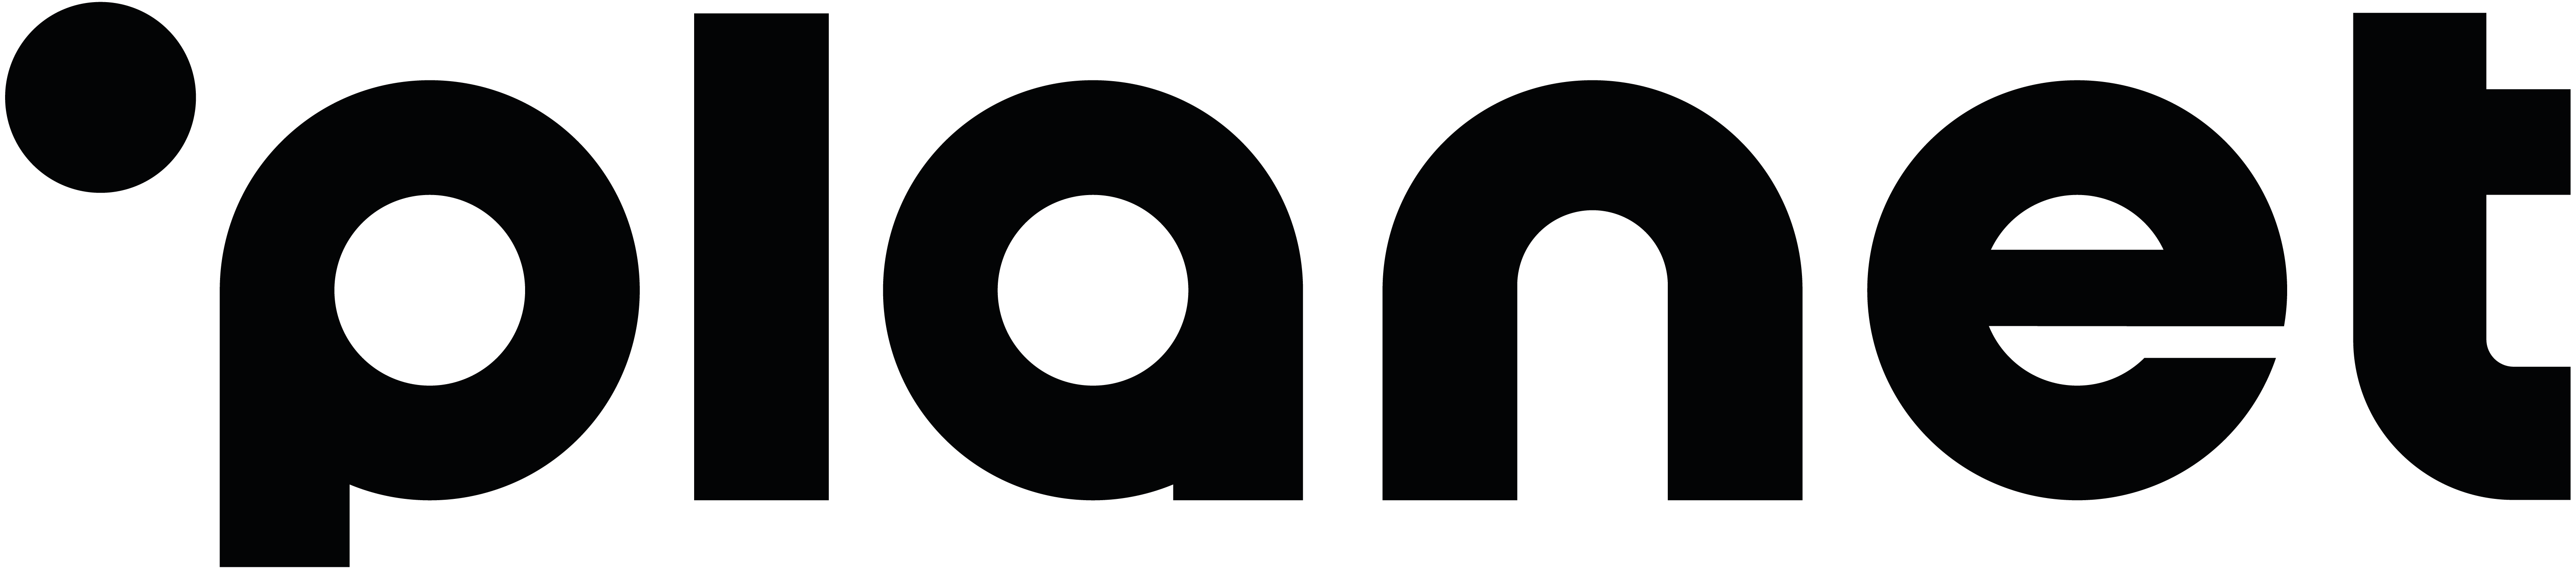 logo-black.png.png